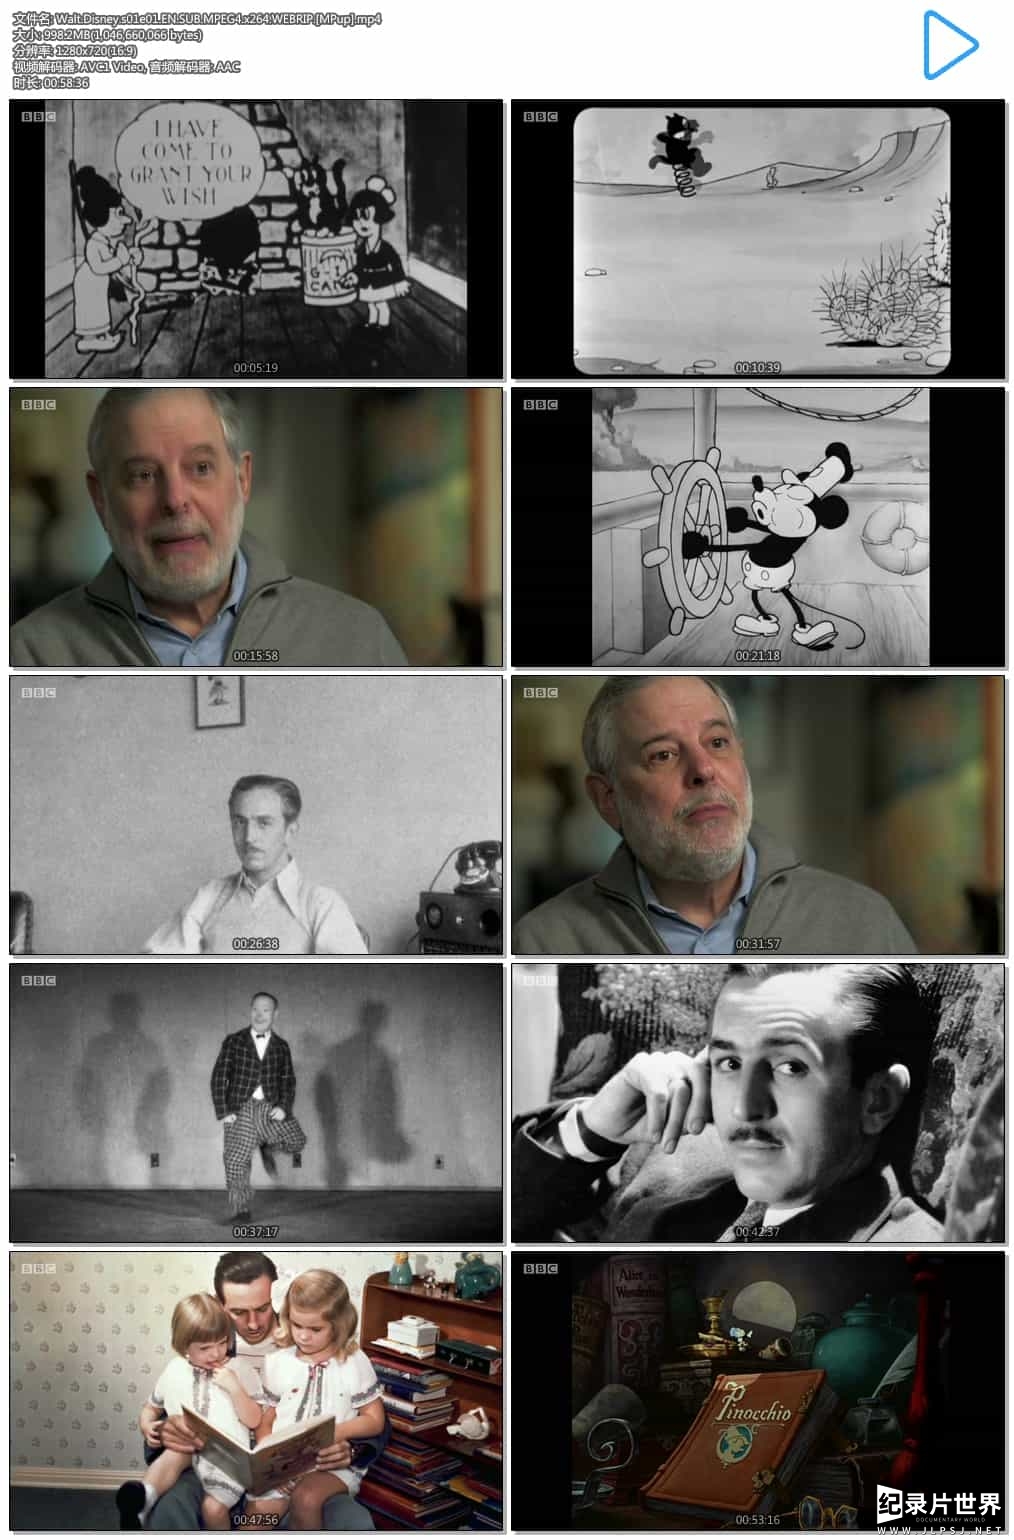 BBC纪录片《沃尔特·迪斯尼 Walt Disney 2016 》全2集